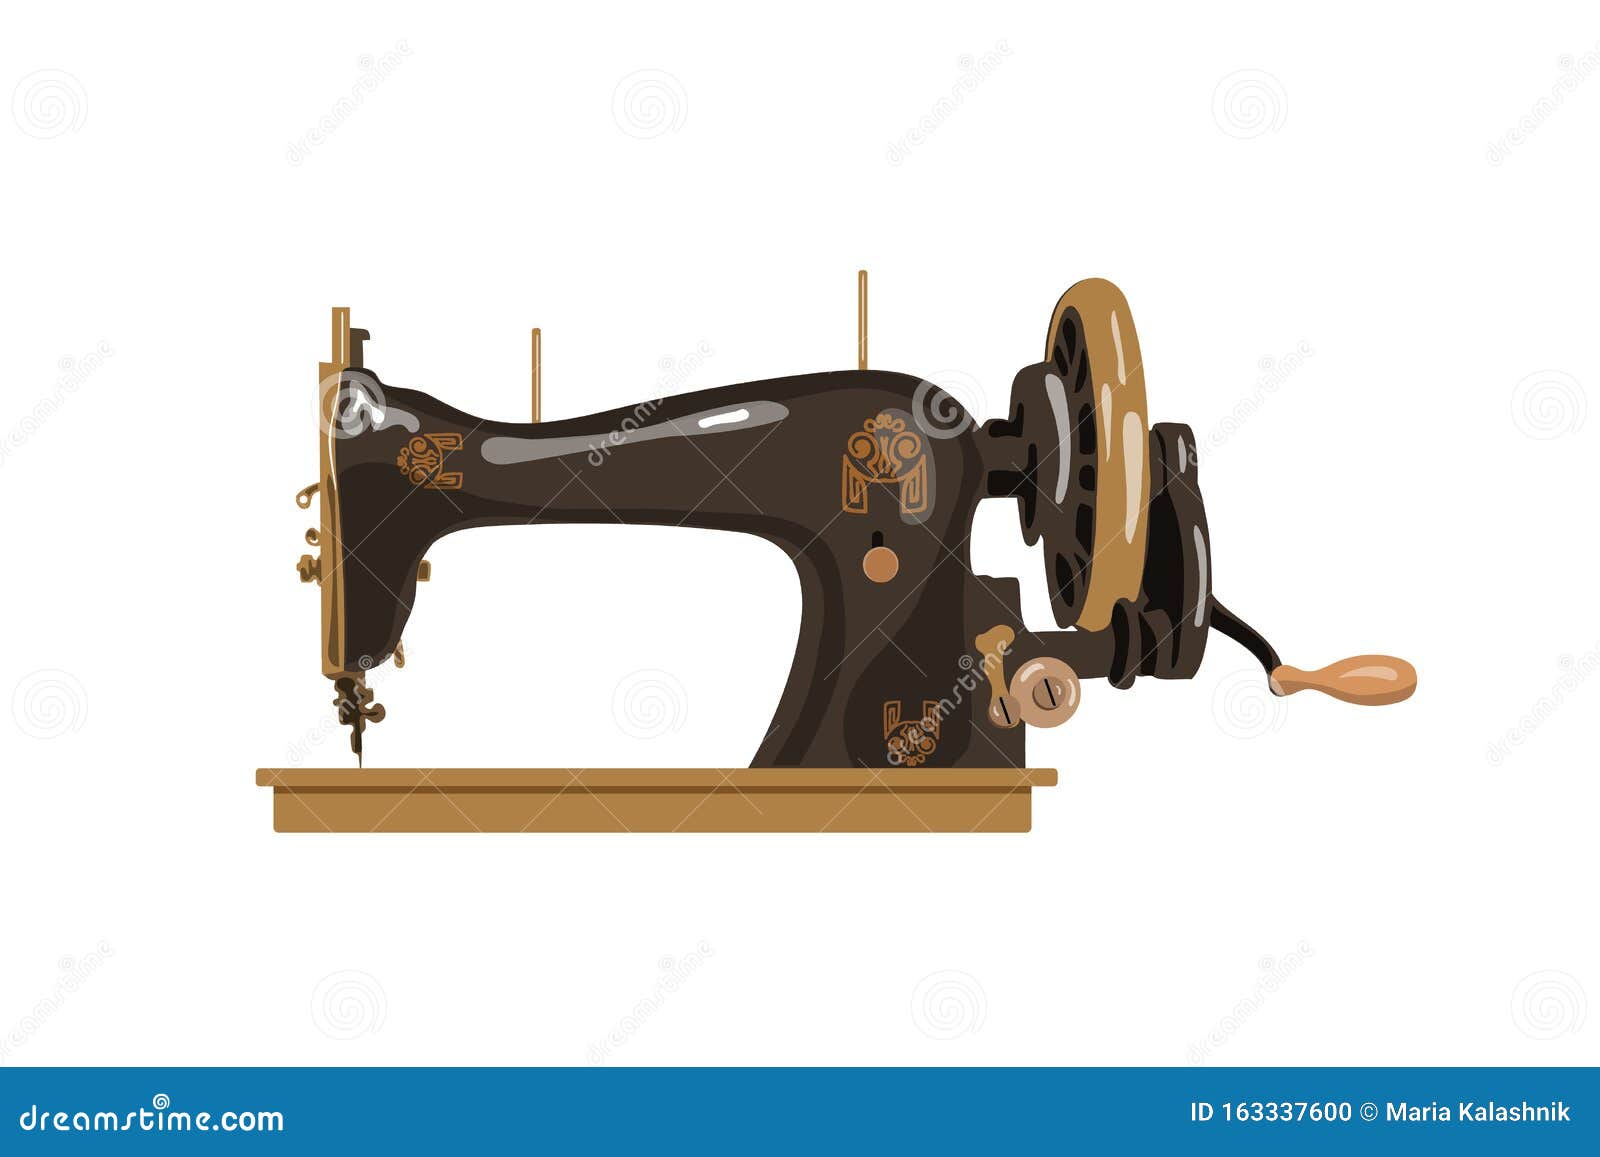 Download Vintage Sewing Machine Vector Illustration. Detailed Image For Logo, Print, Stock Vector ...